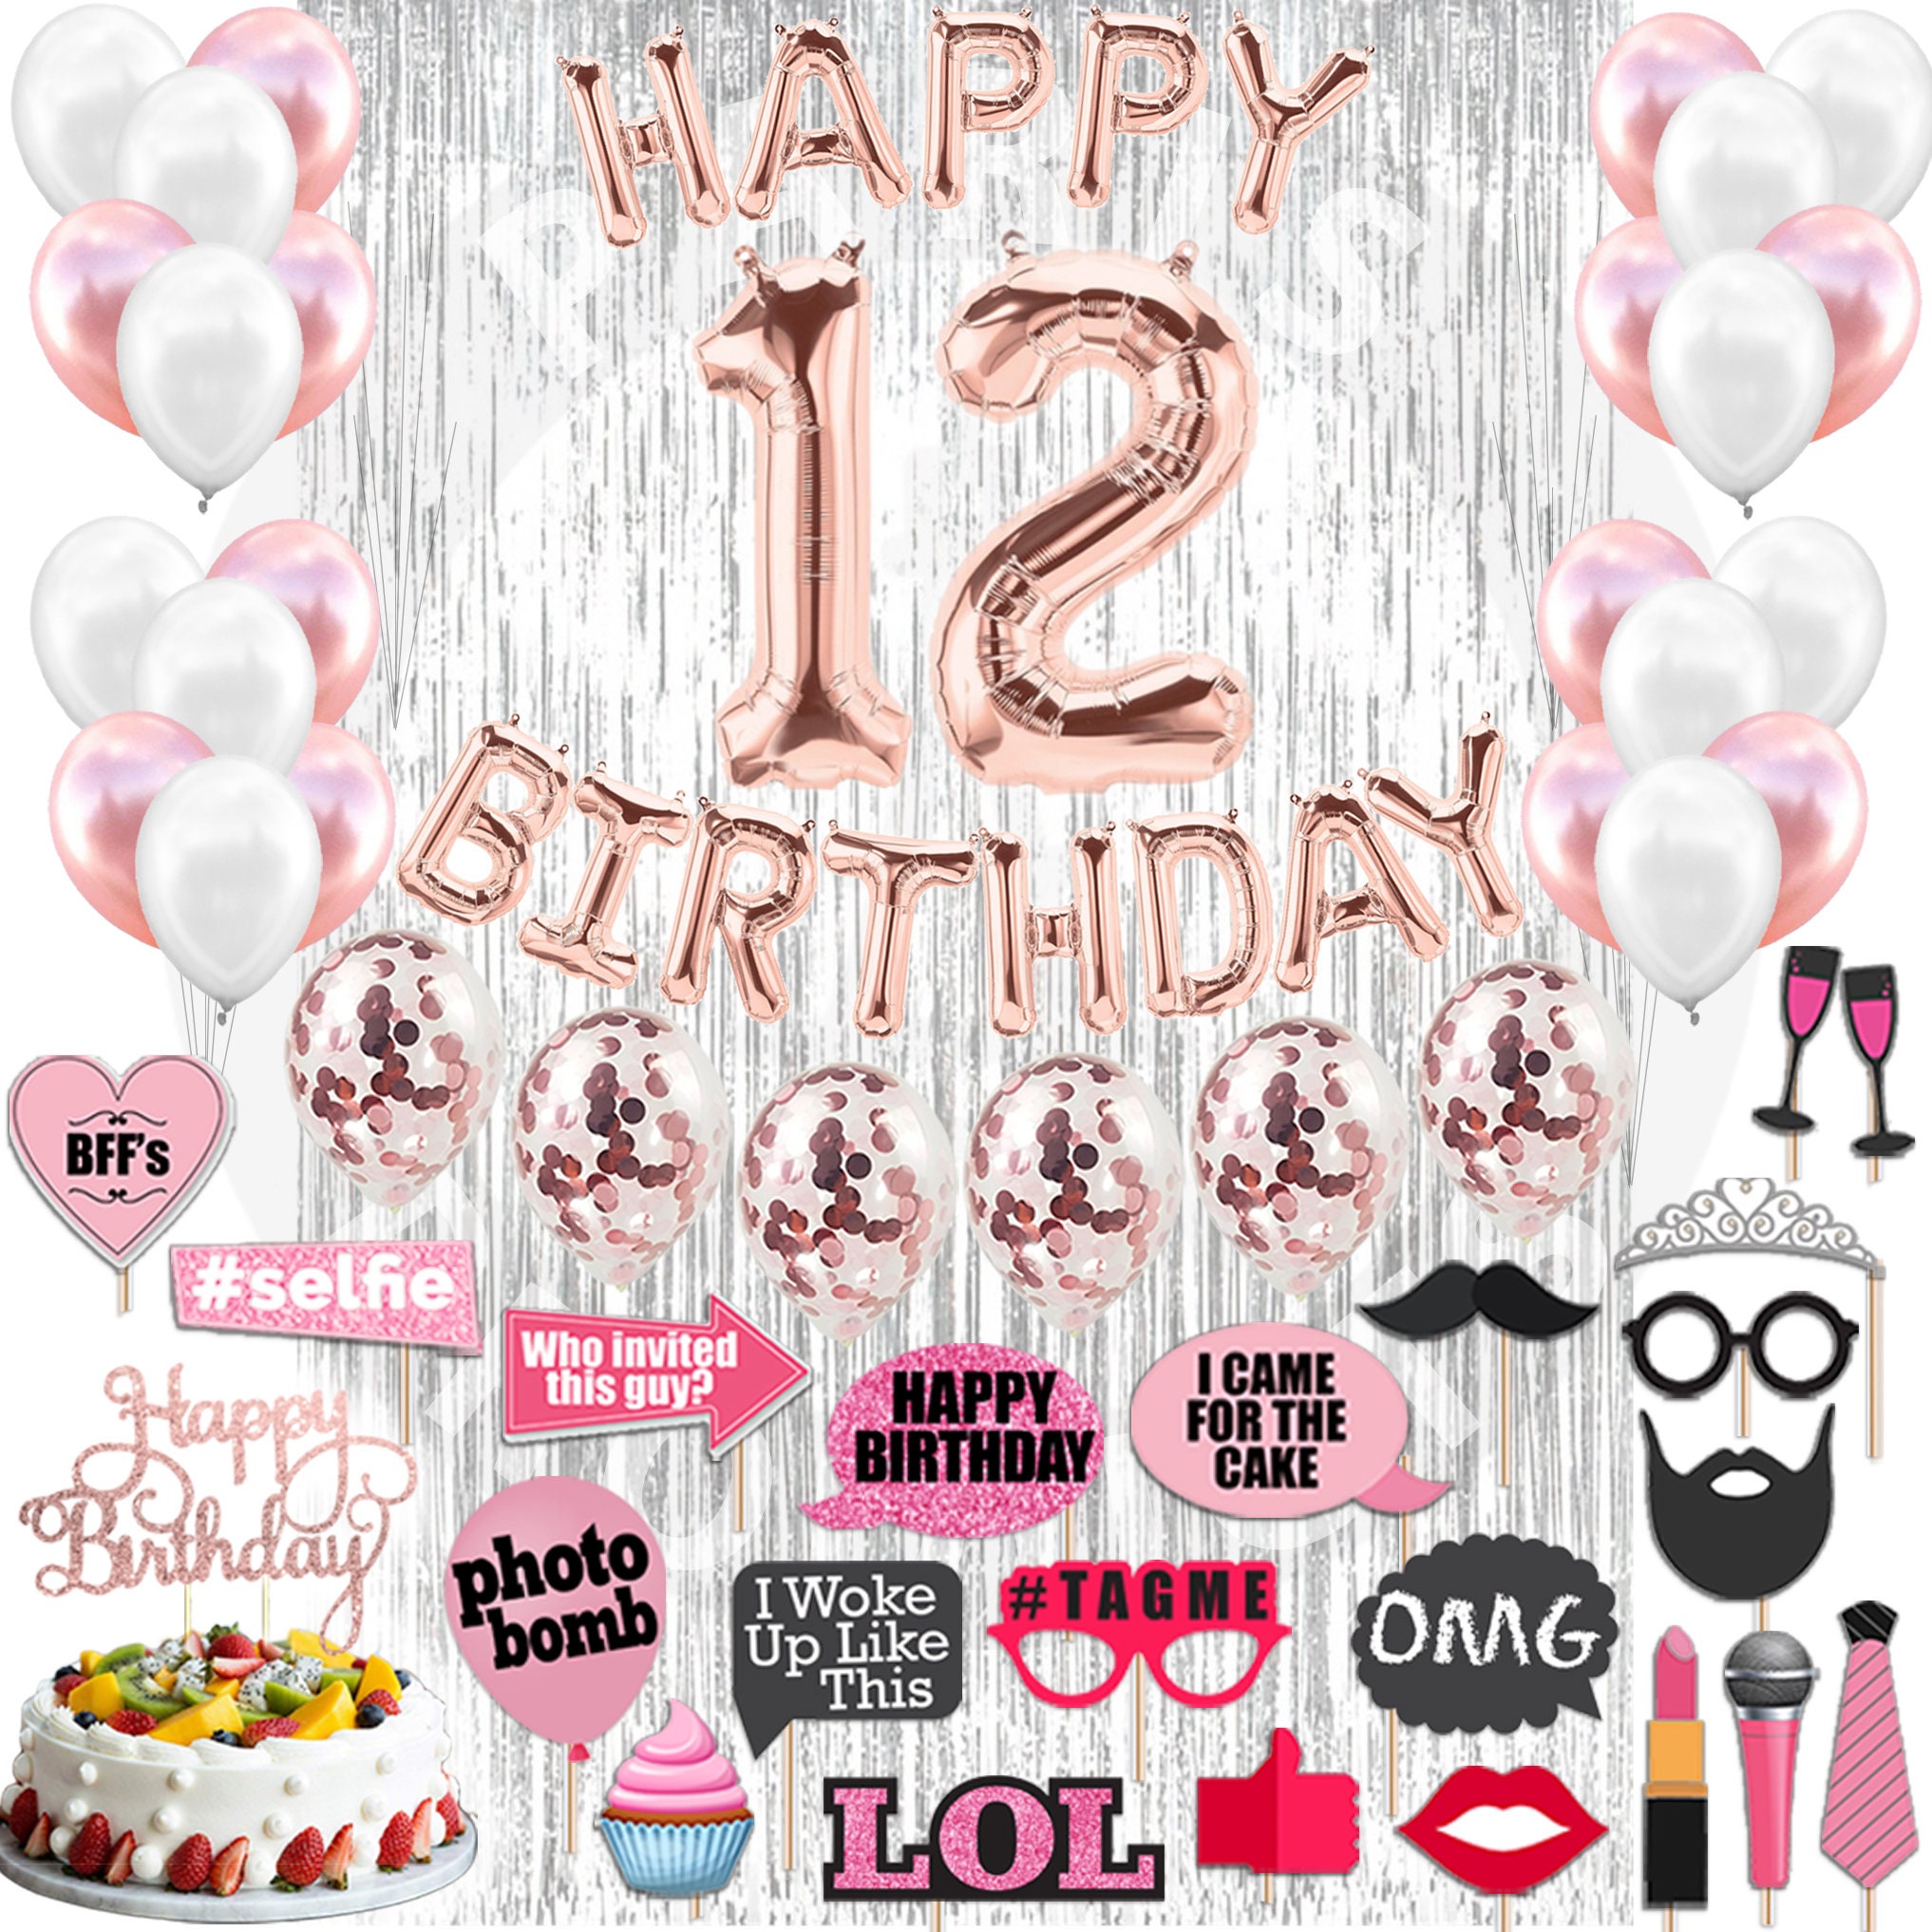 Yufobel 12 Year Old Girl Gifts for Birthday, 12th Birthday Gifts for Girls, 12th Birthday Decorations for Girls, Birthday Gifts for 12 Year Old